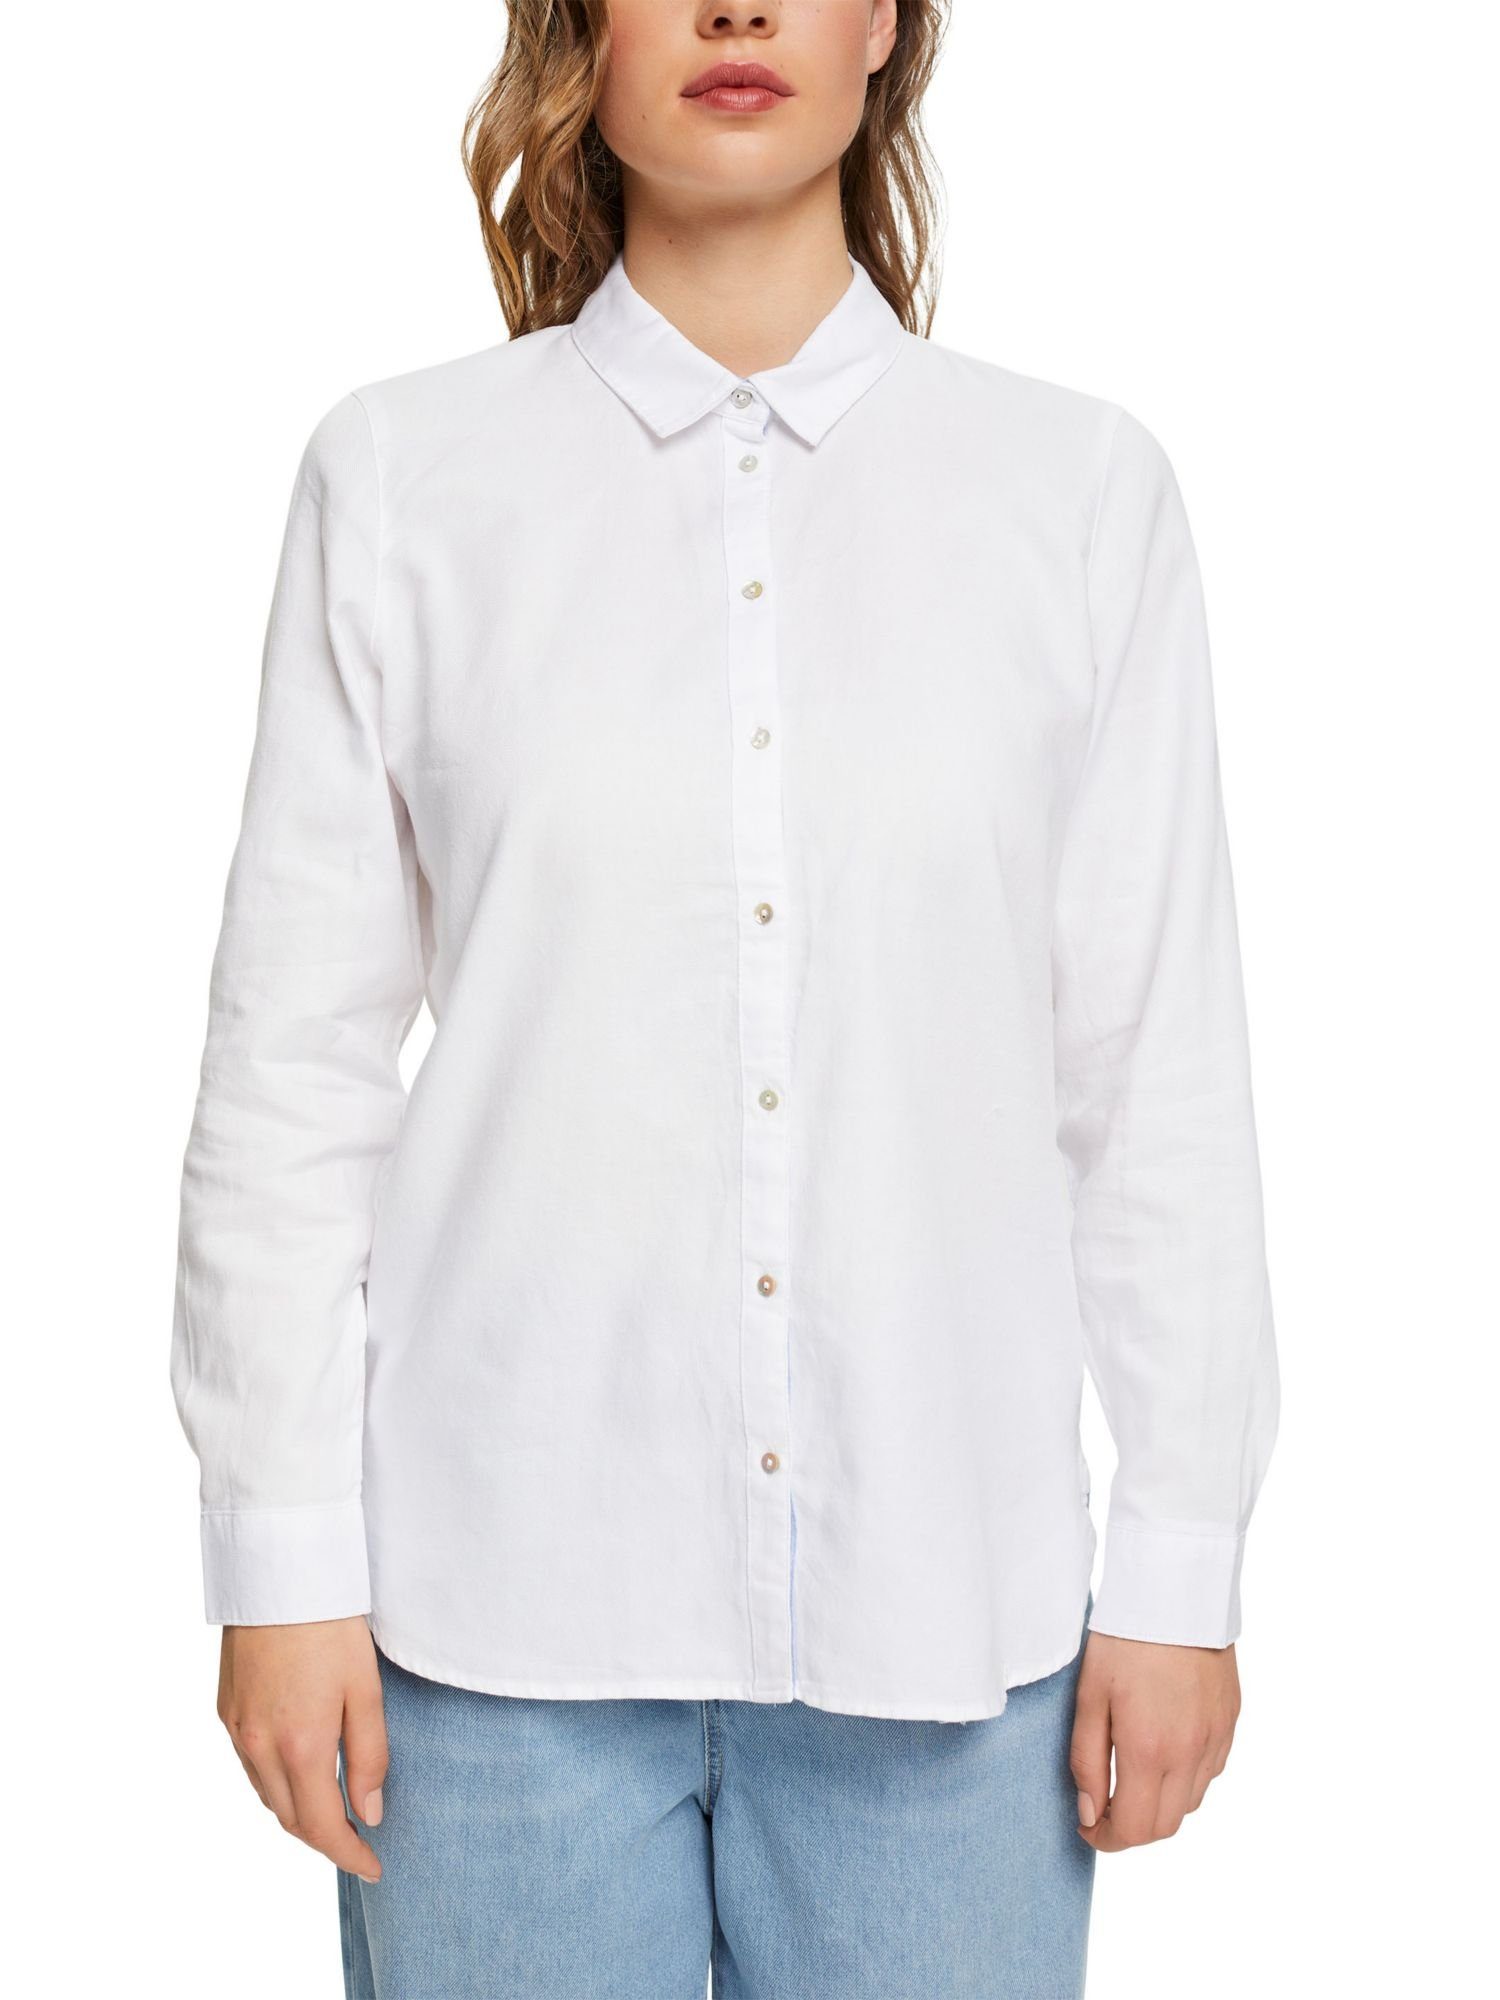 Esprit Langarmbluse Baumwolle WHITE 100% Hemd-Bluse aus